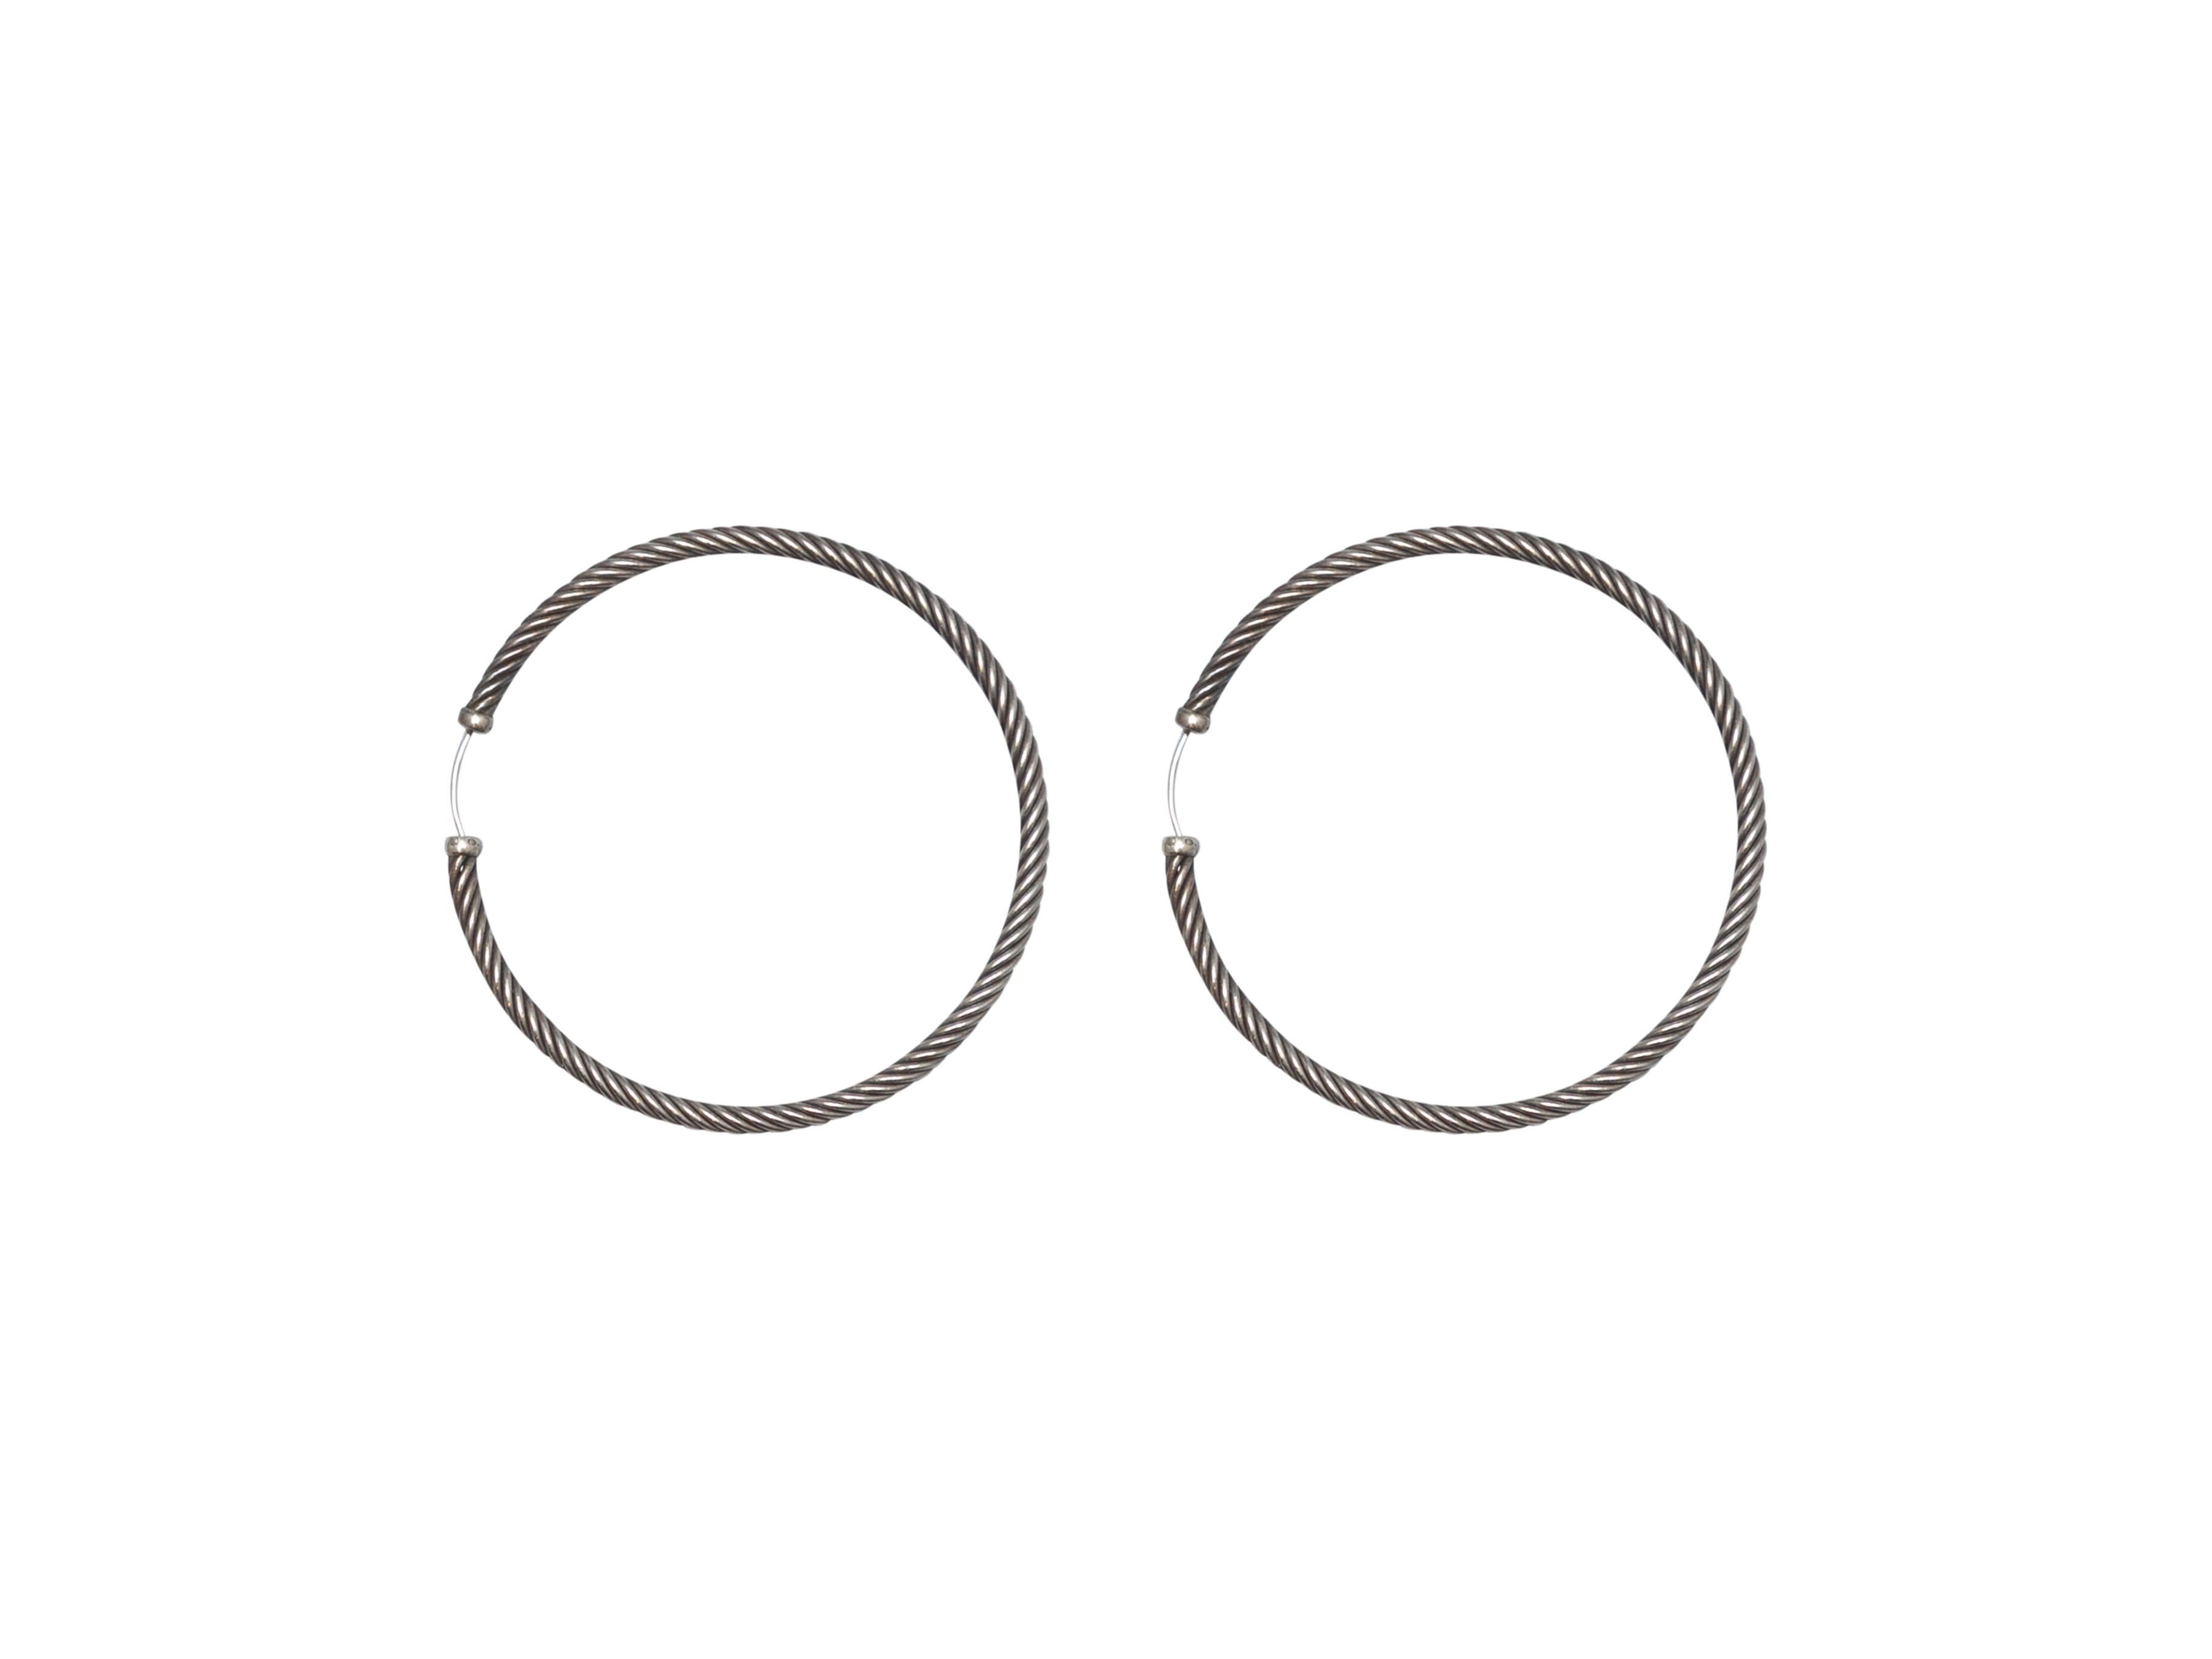 Product details: Sterling silver coil hoop earrings by David Yurman. 2.25